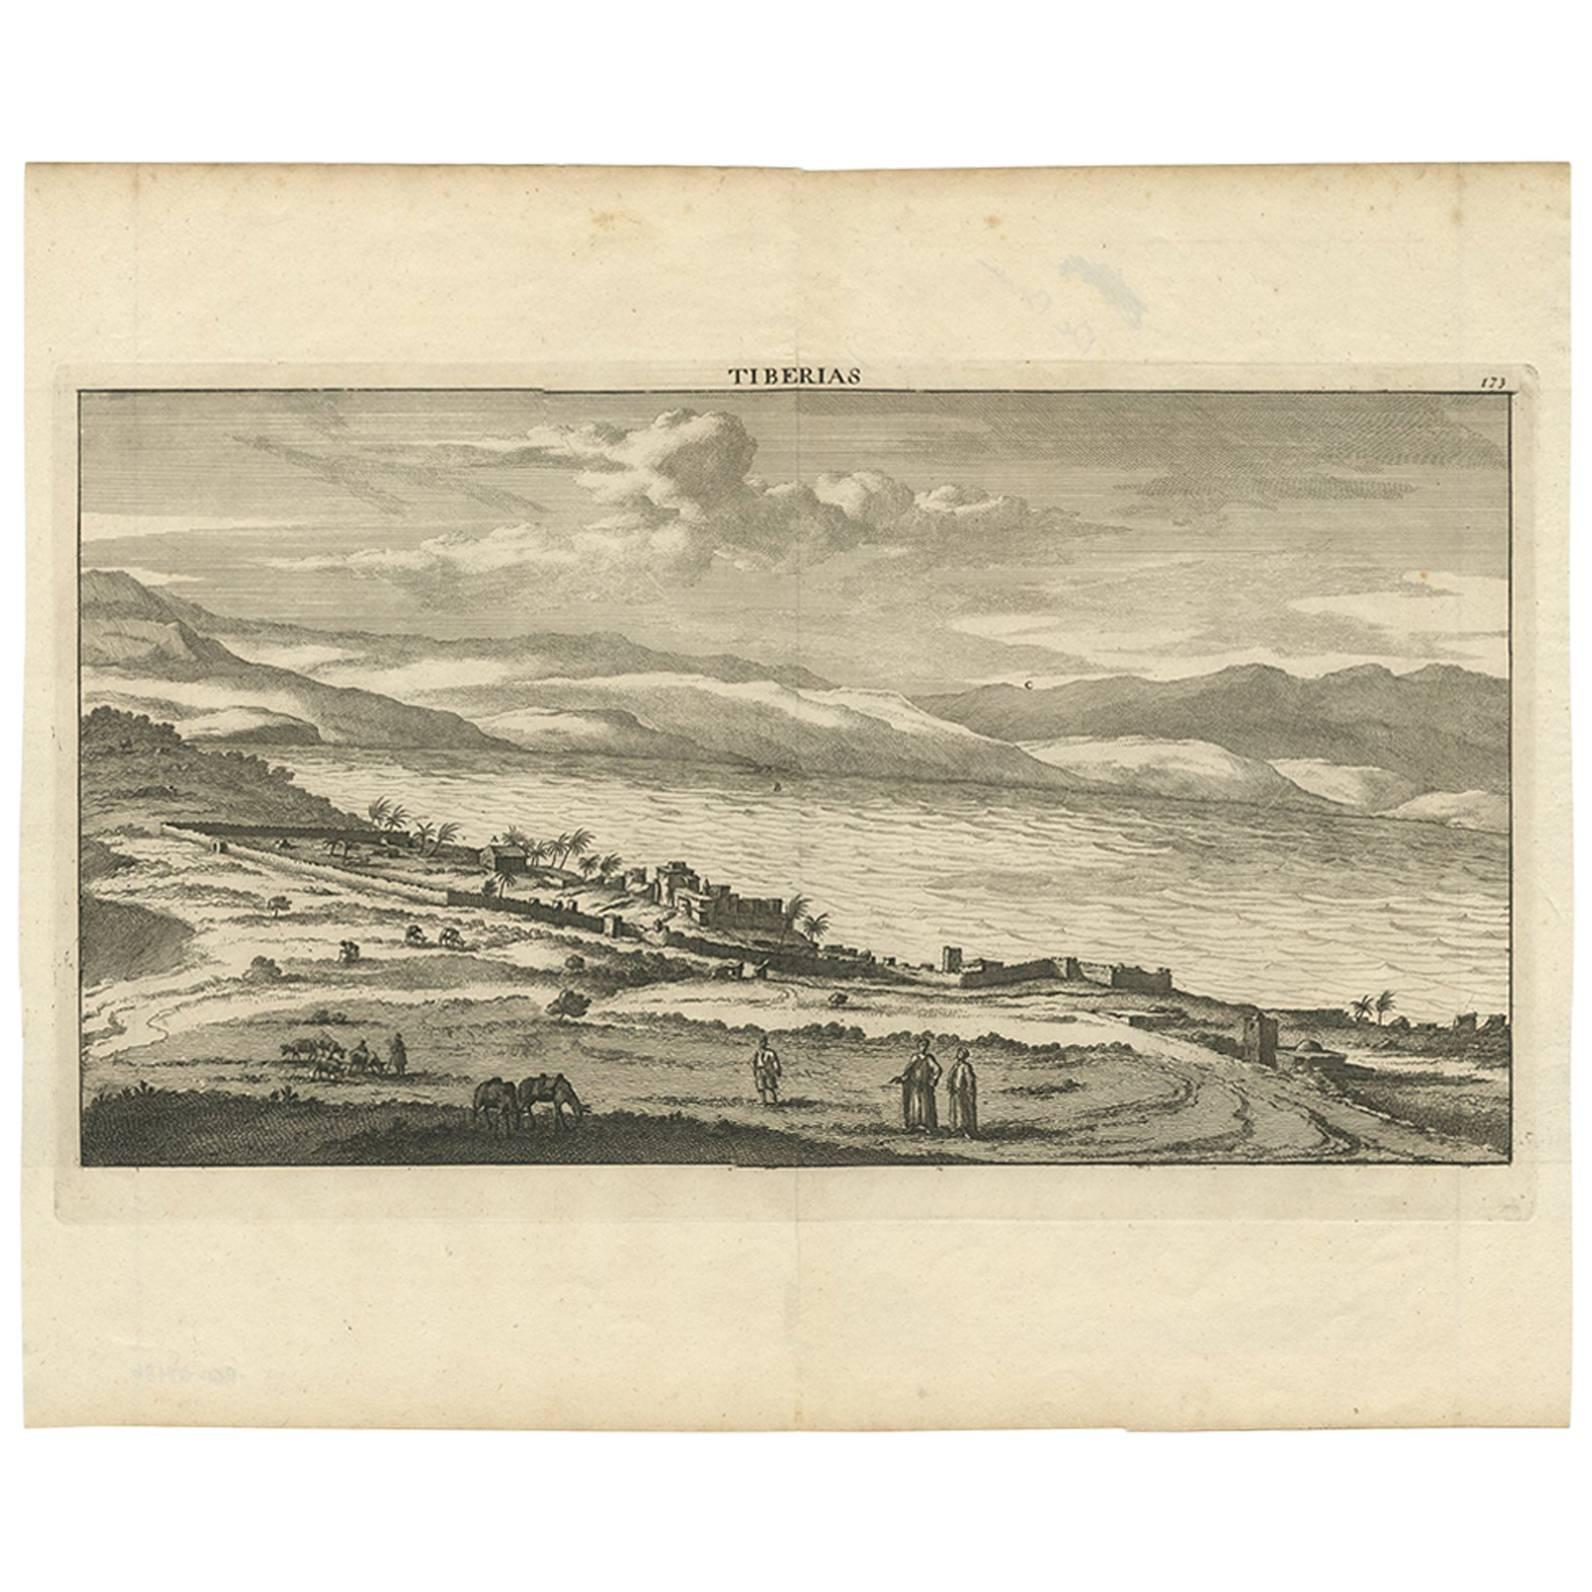 Antique Print of Tiberias 'Israel' by C. le Brun, 1700